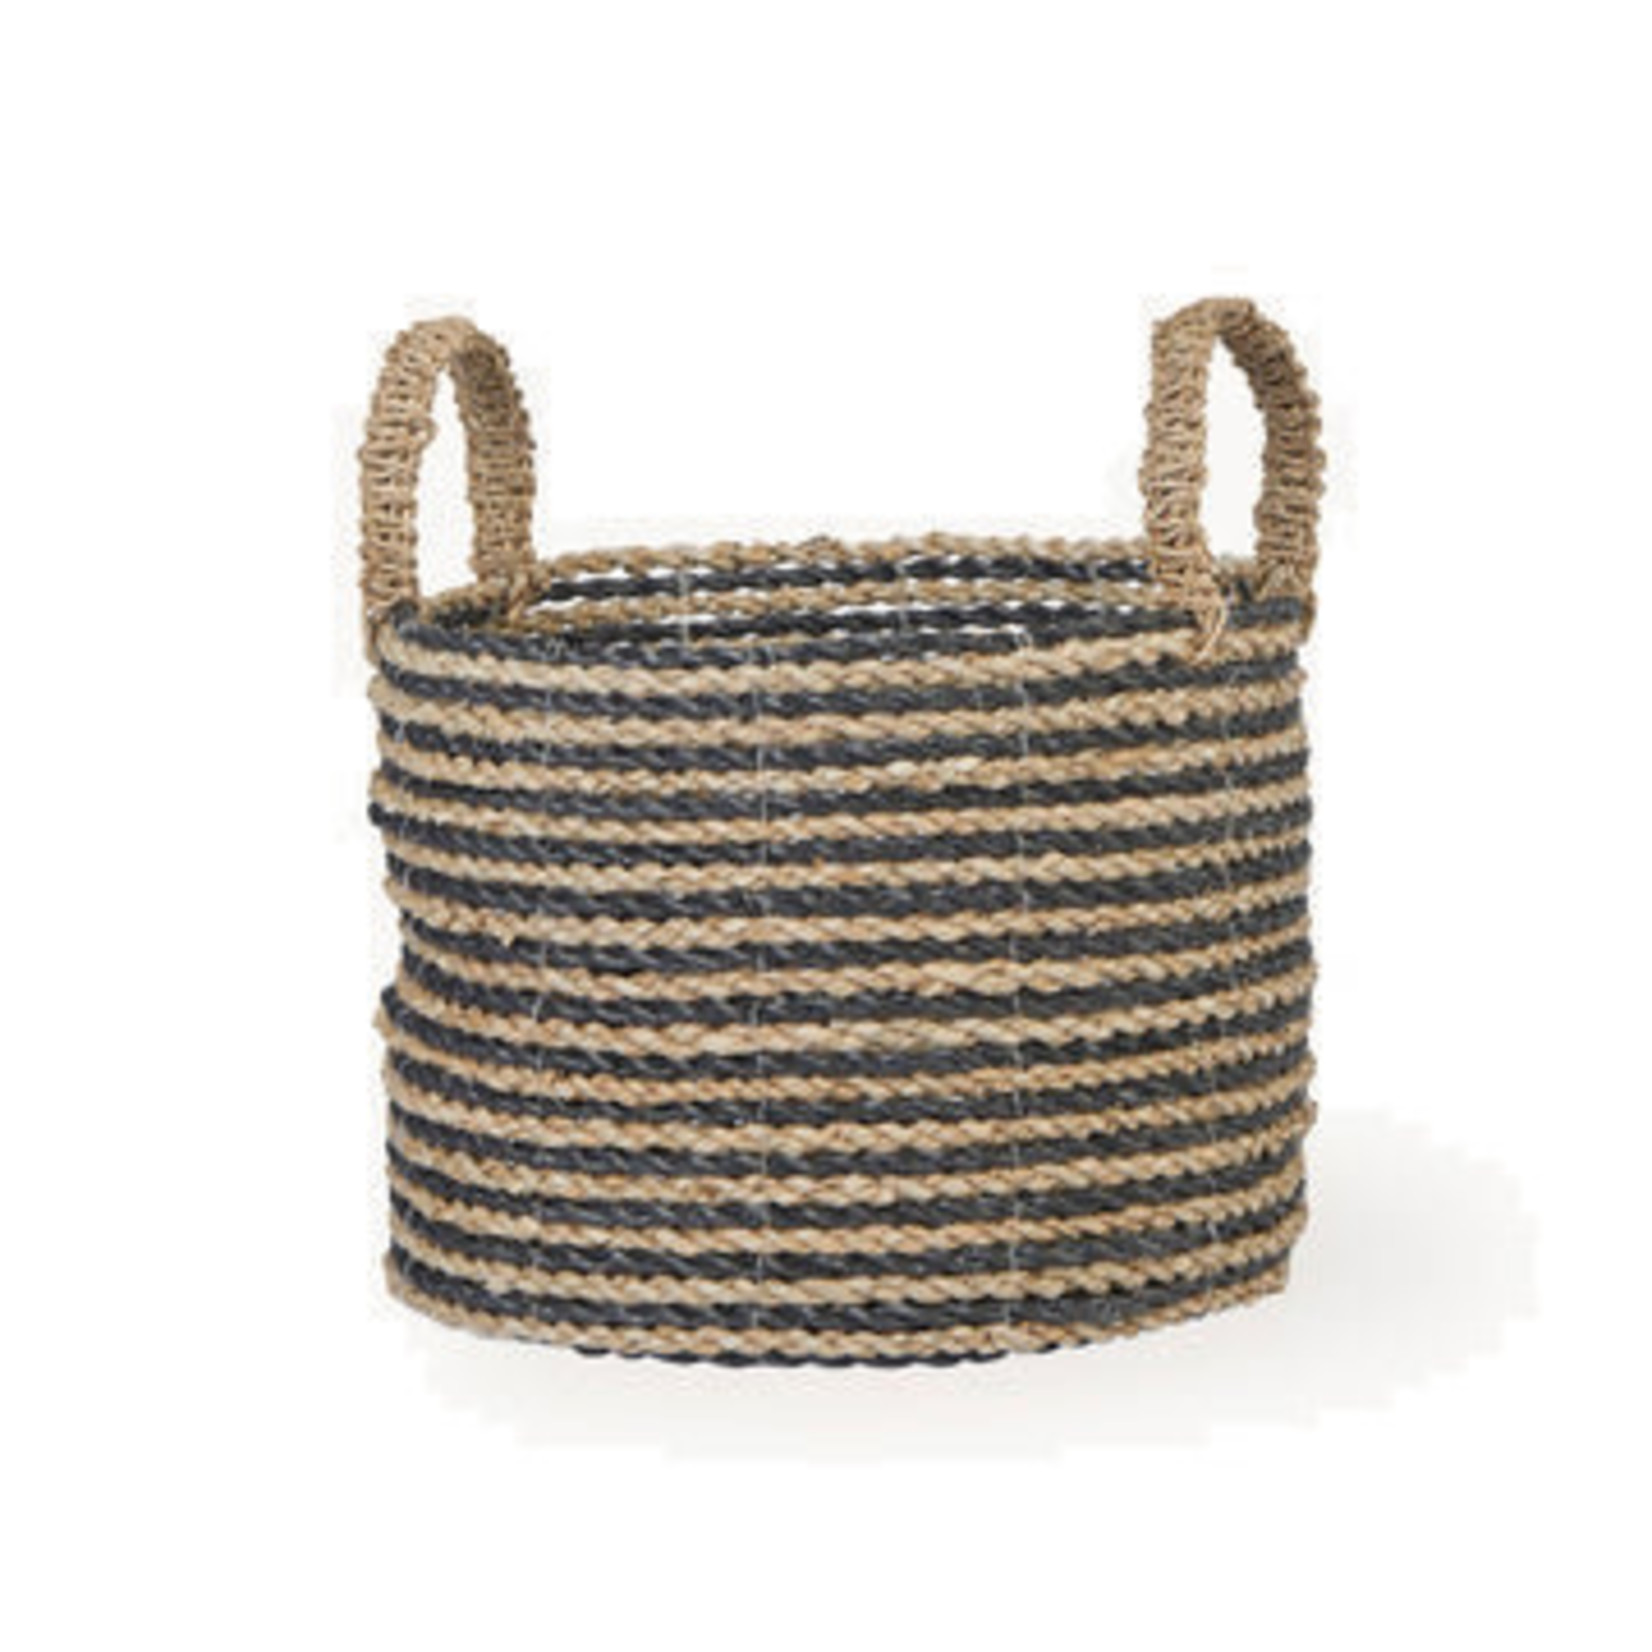 Pokoloko Handled Basket - Black/Natural